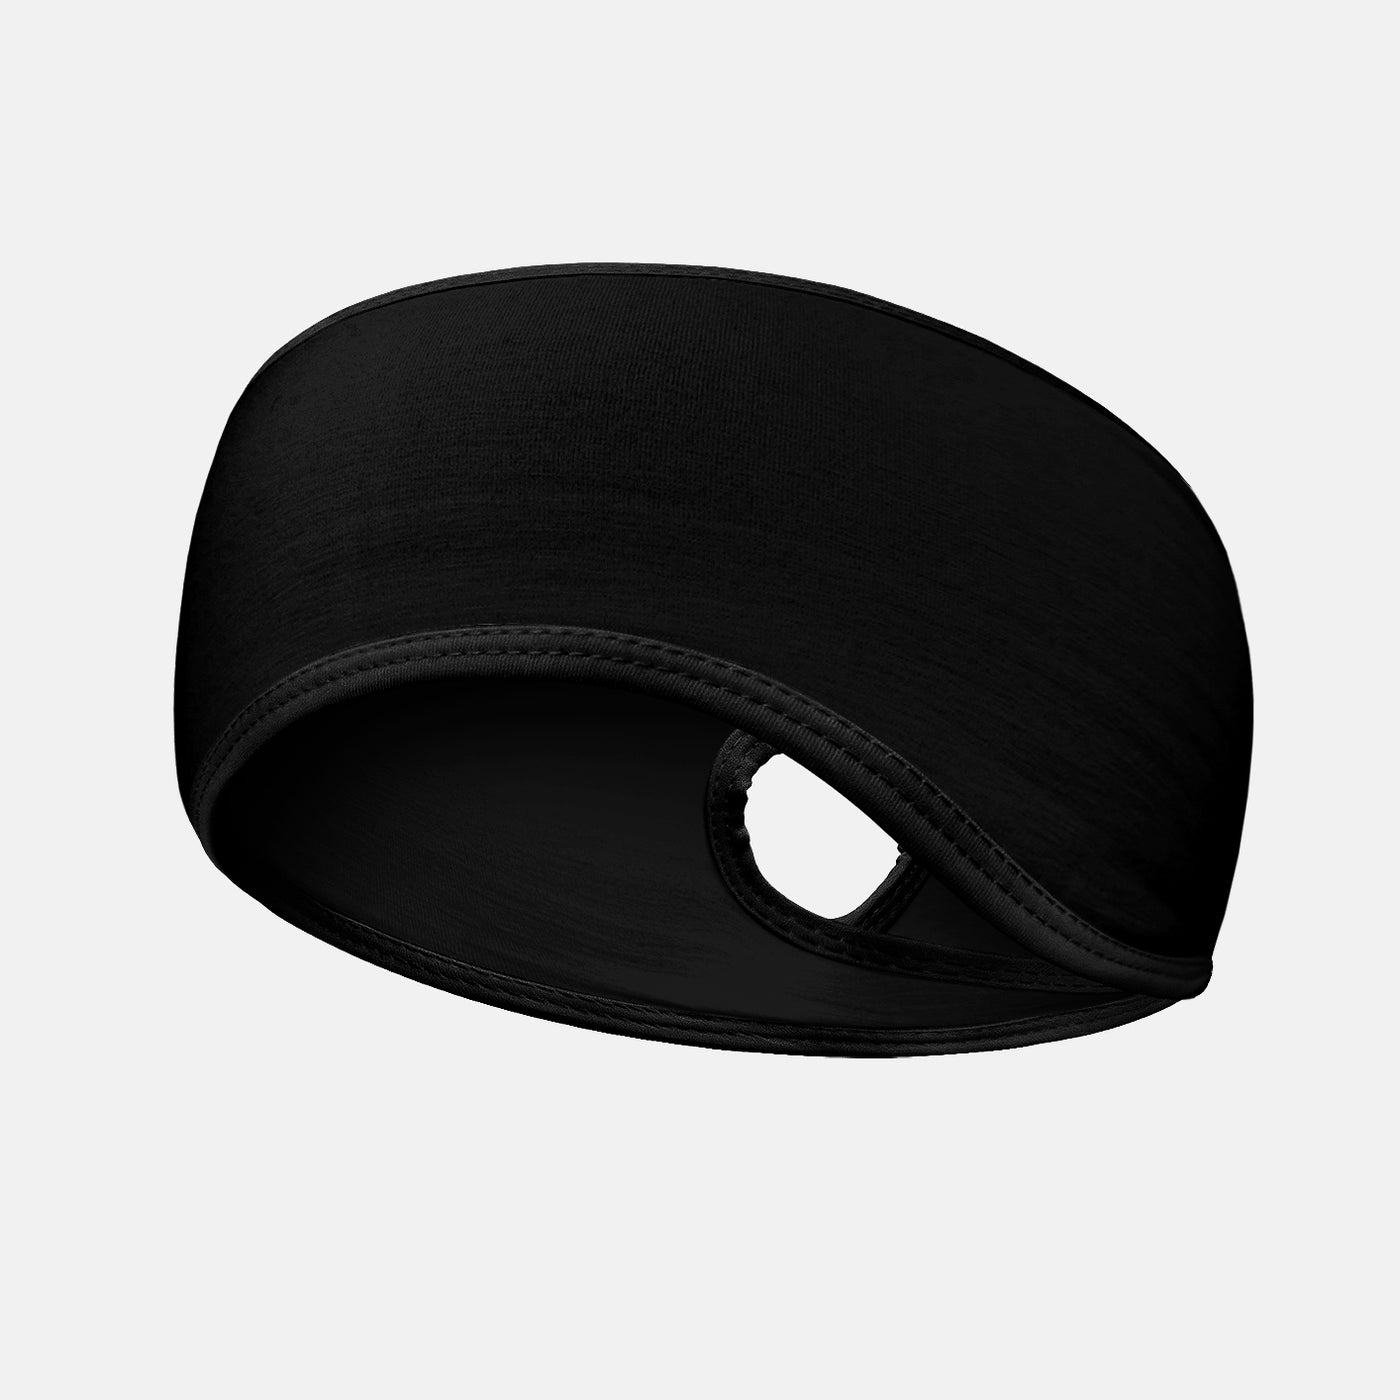 Basic Black Ear Warmer Ponytail Headband